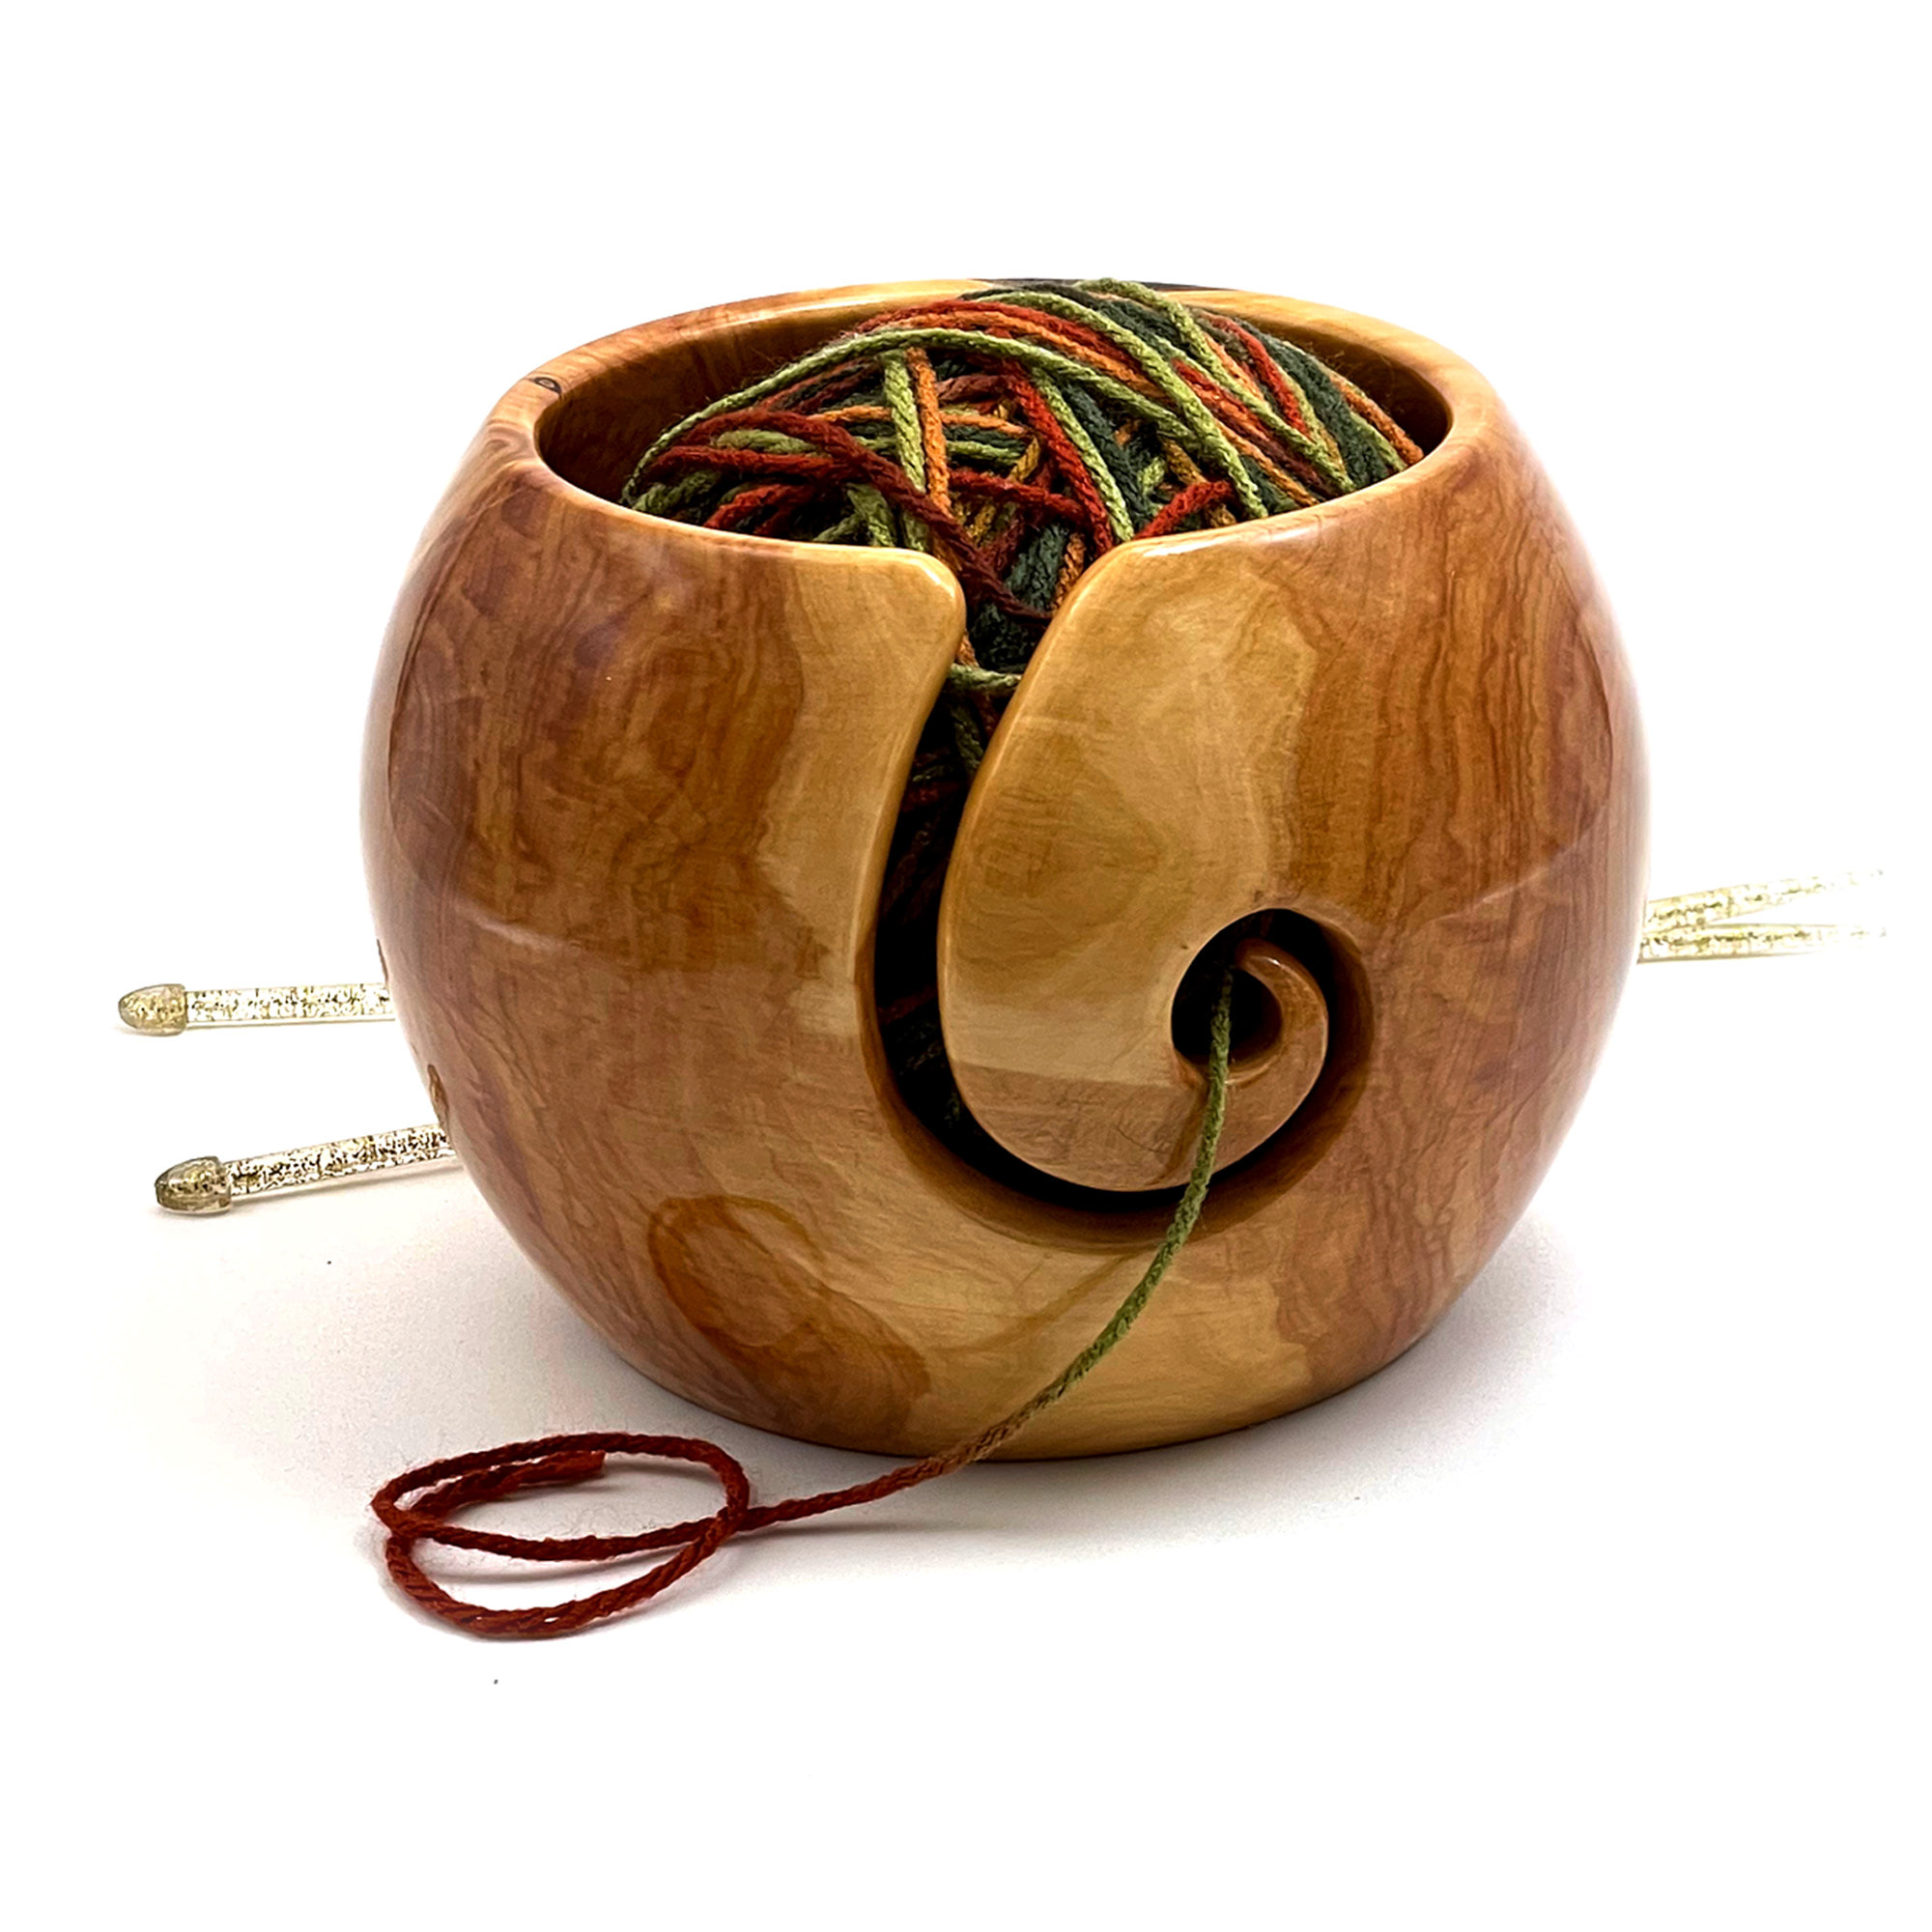 Large AZ Cypress Yarn Bowl with Golden Grains For Knitting, Crochet,  Yarning #657